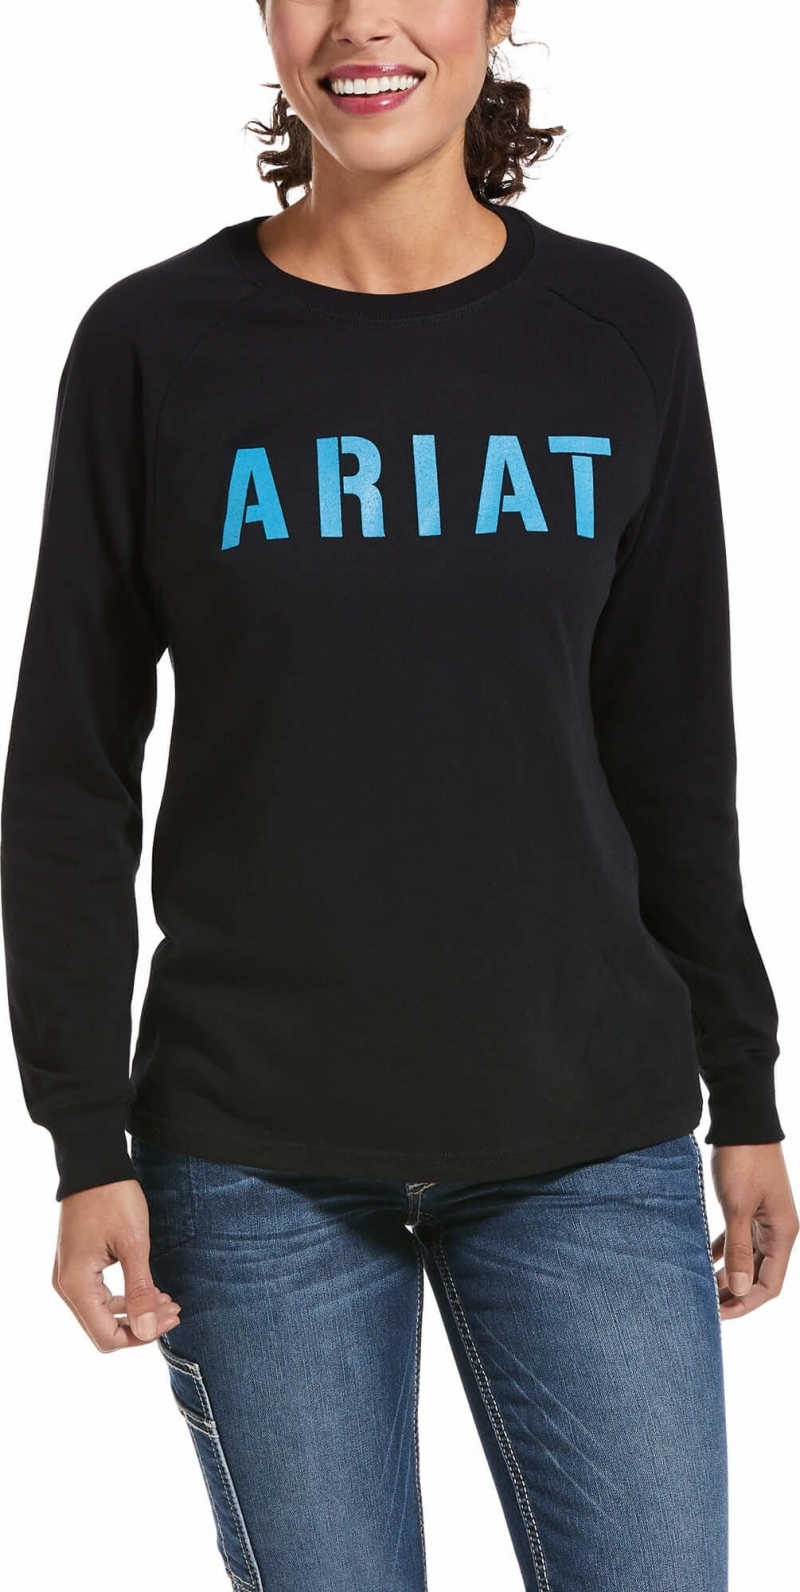 Ariat Women's Rebar Cotton Strong Block Logo L/S Shirt - Black